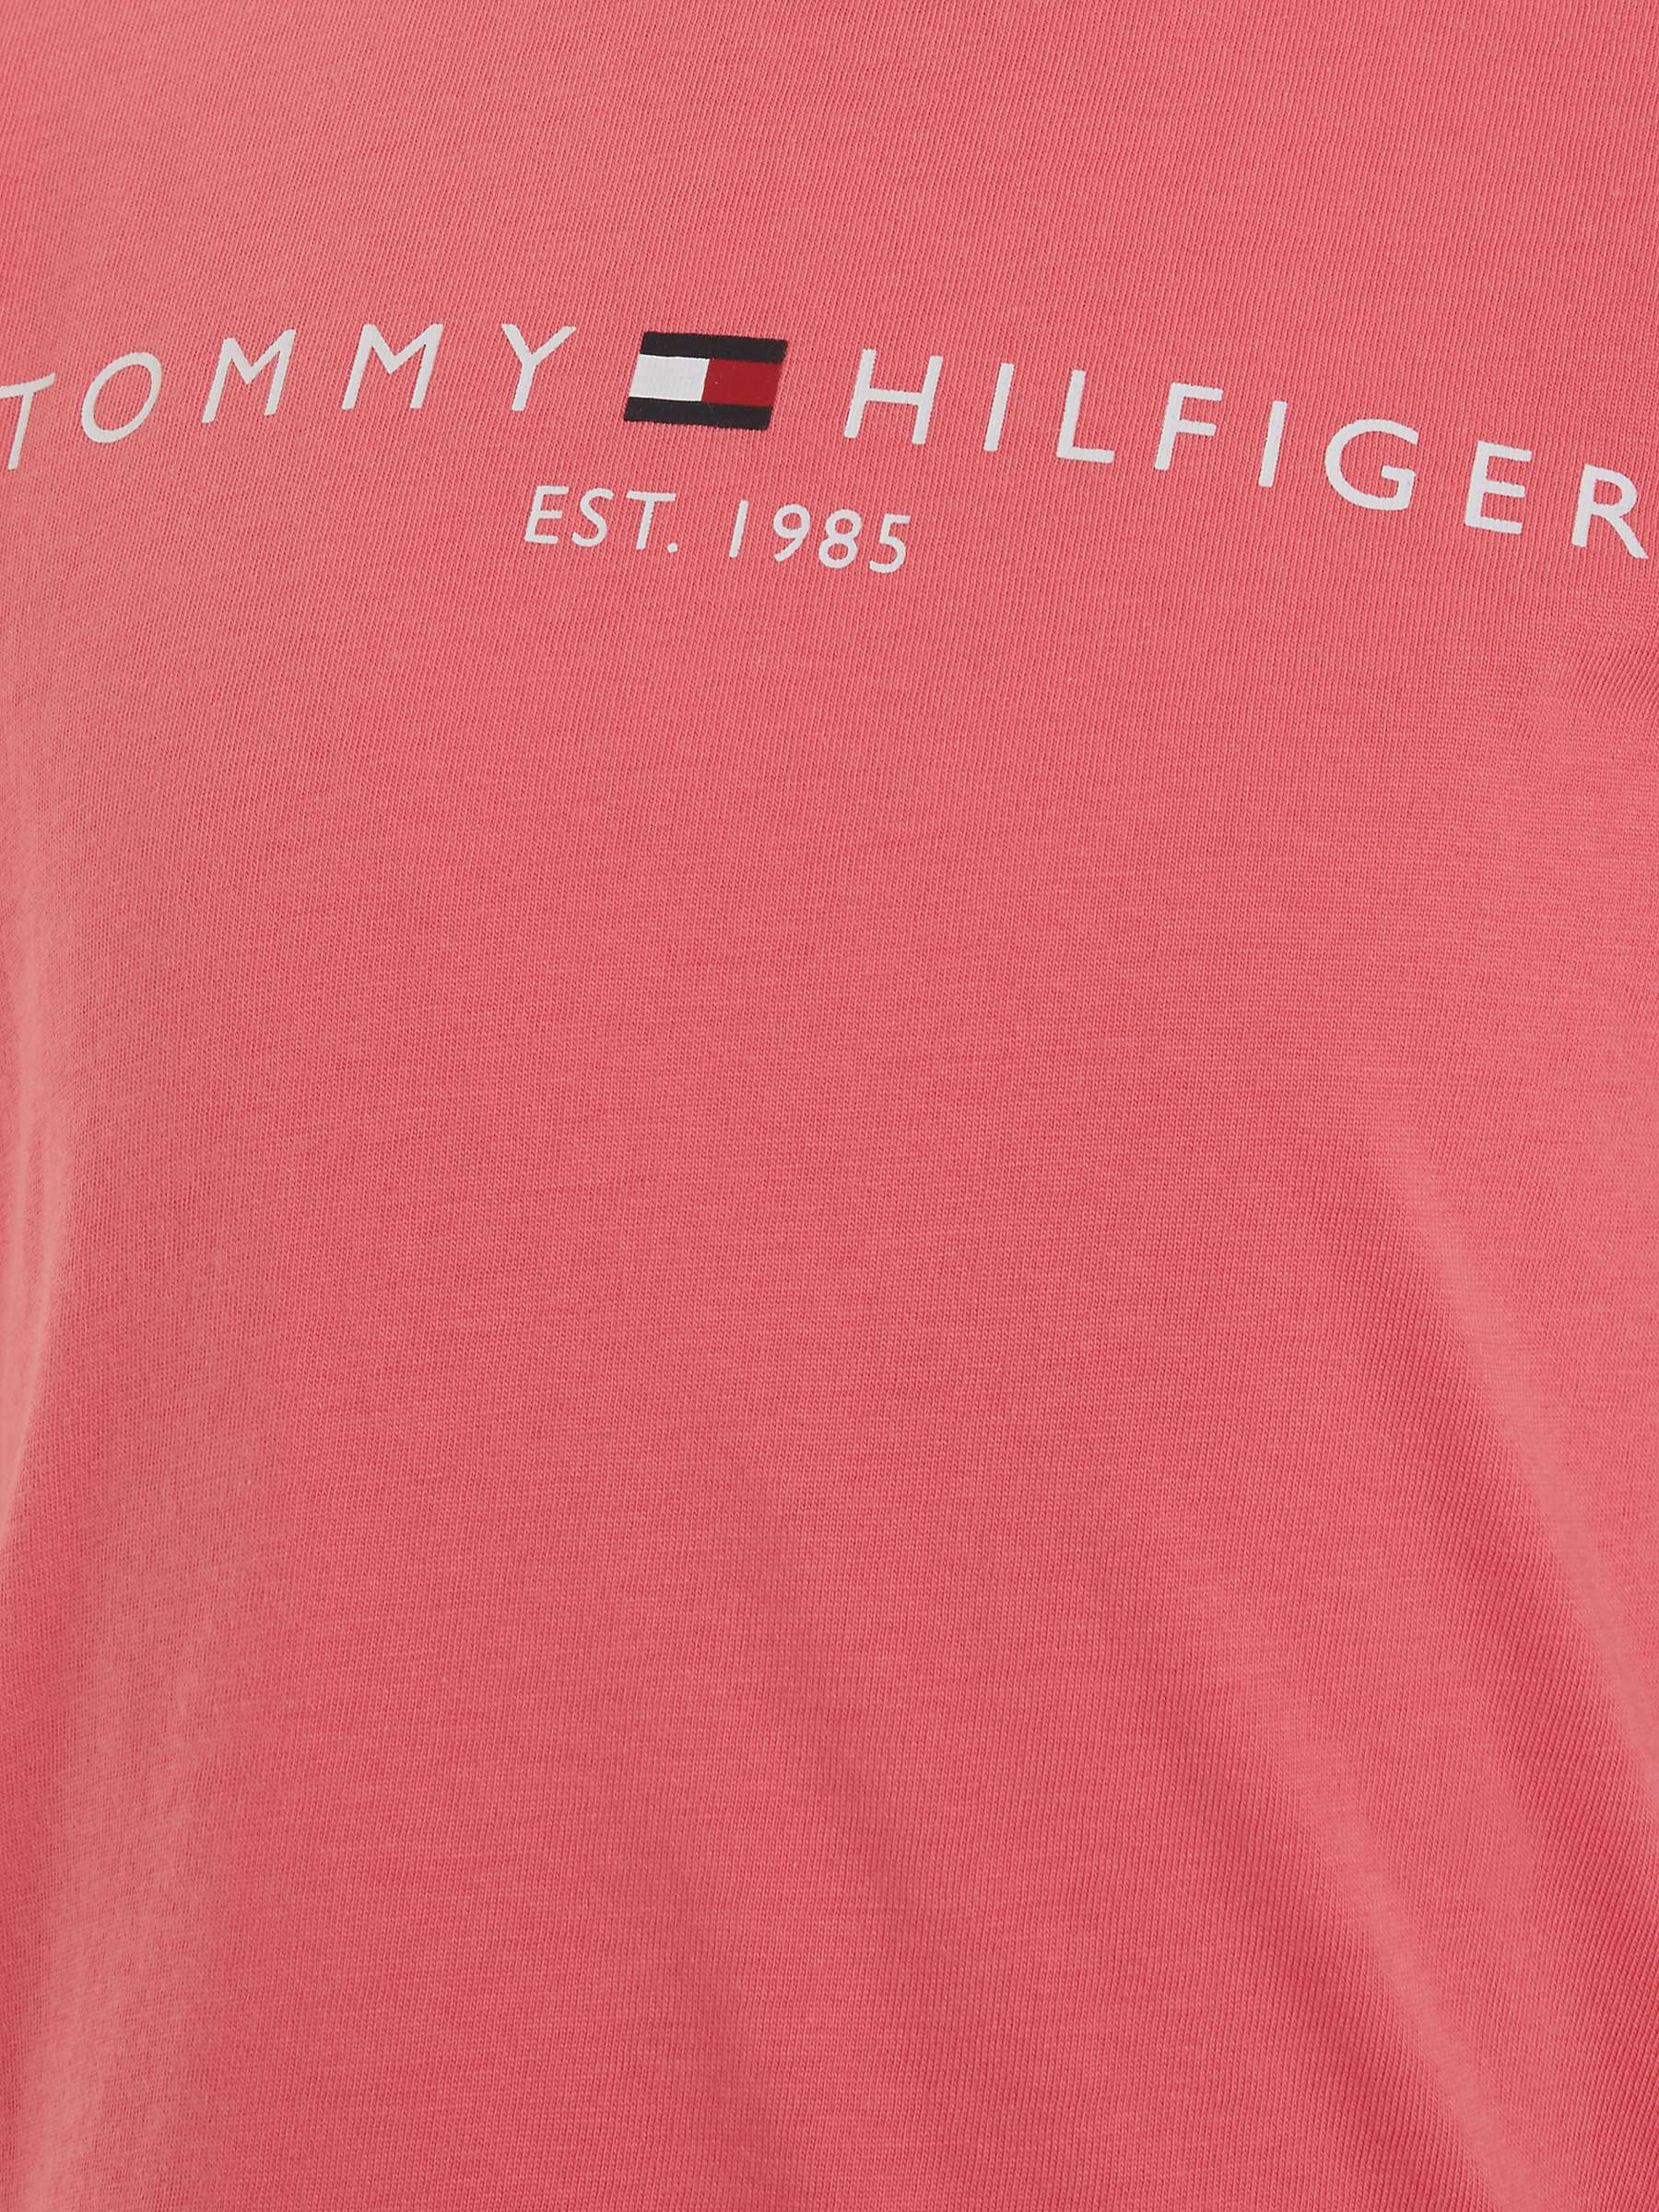 Buy Tommy Hilfiger Kids' Essential Organic Cotton Logo Tee Online at johnlewis.com